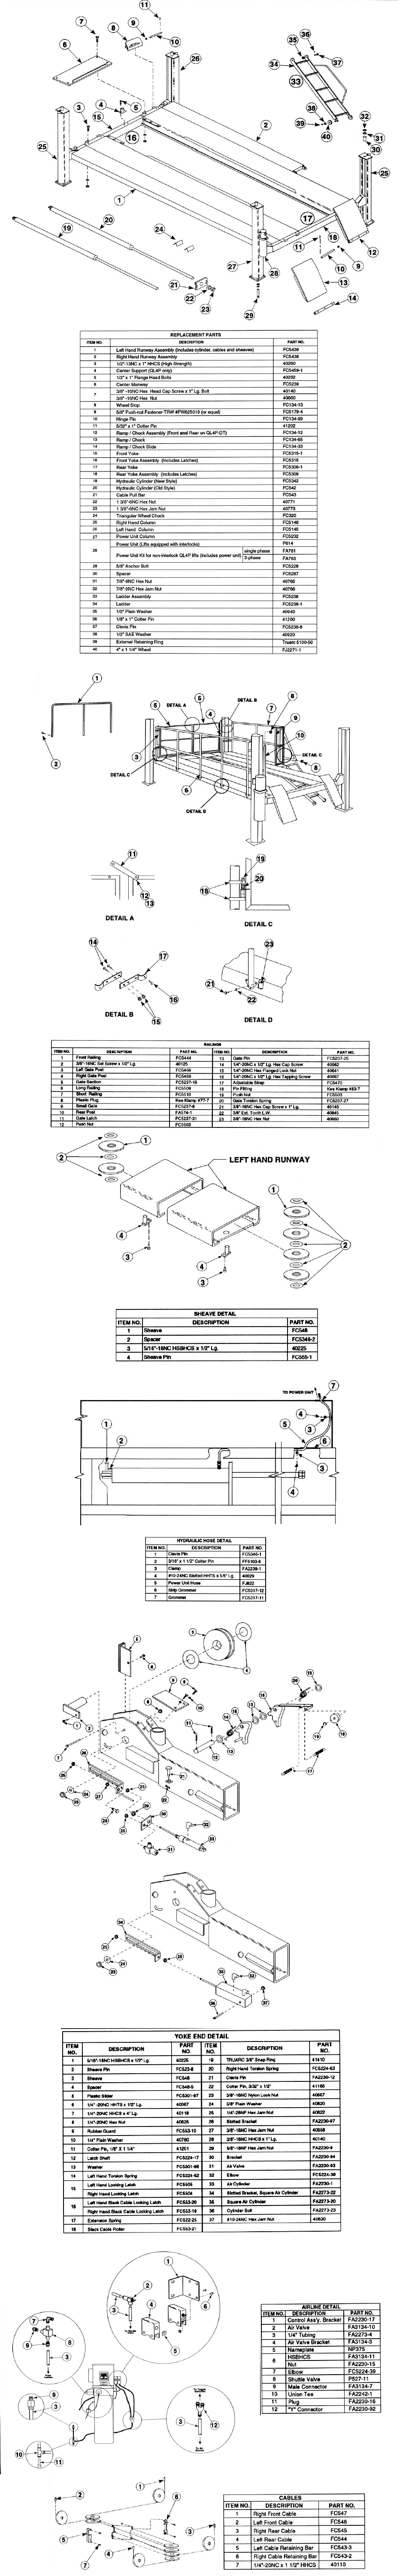 30 Rotary Lift Parts Diagram